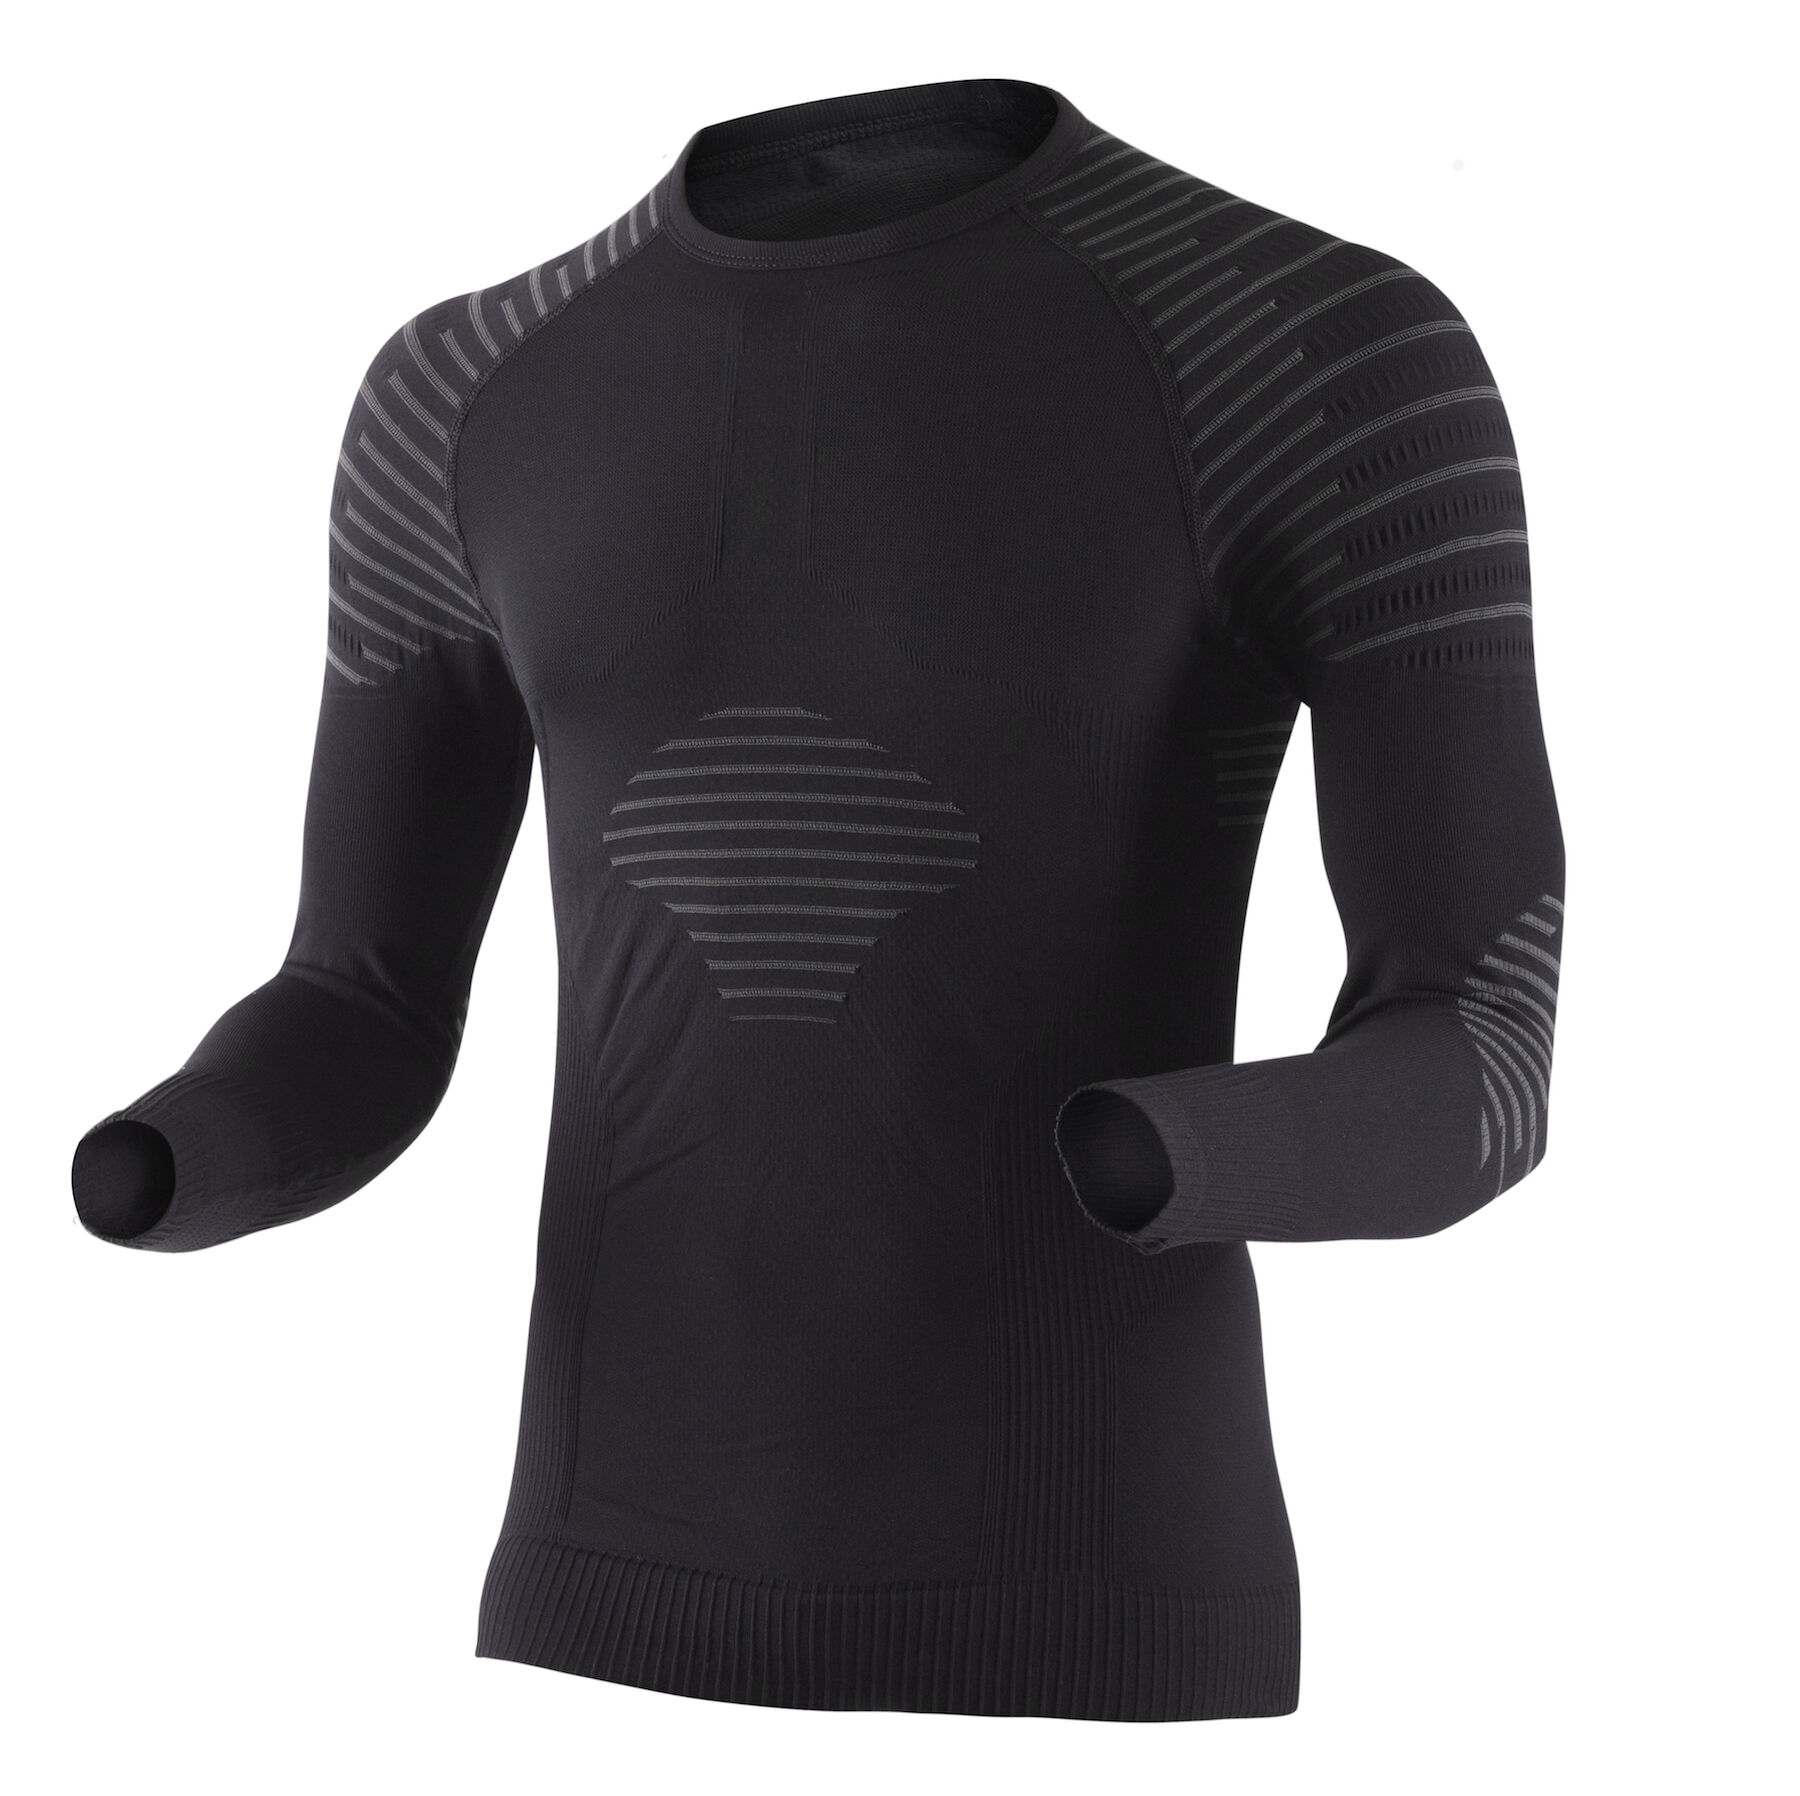 X-Bionic - Invent Shirt long sleeves - Base layer - Men's